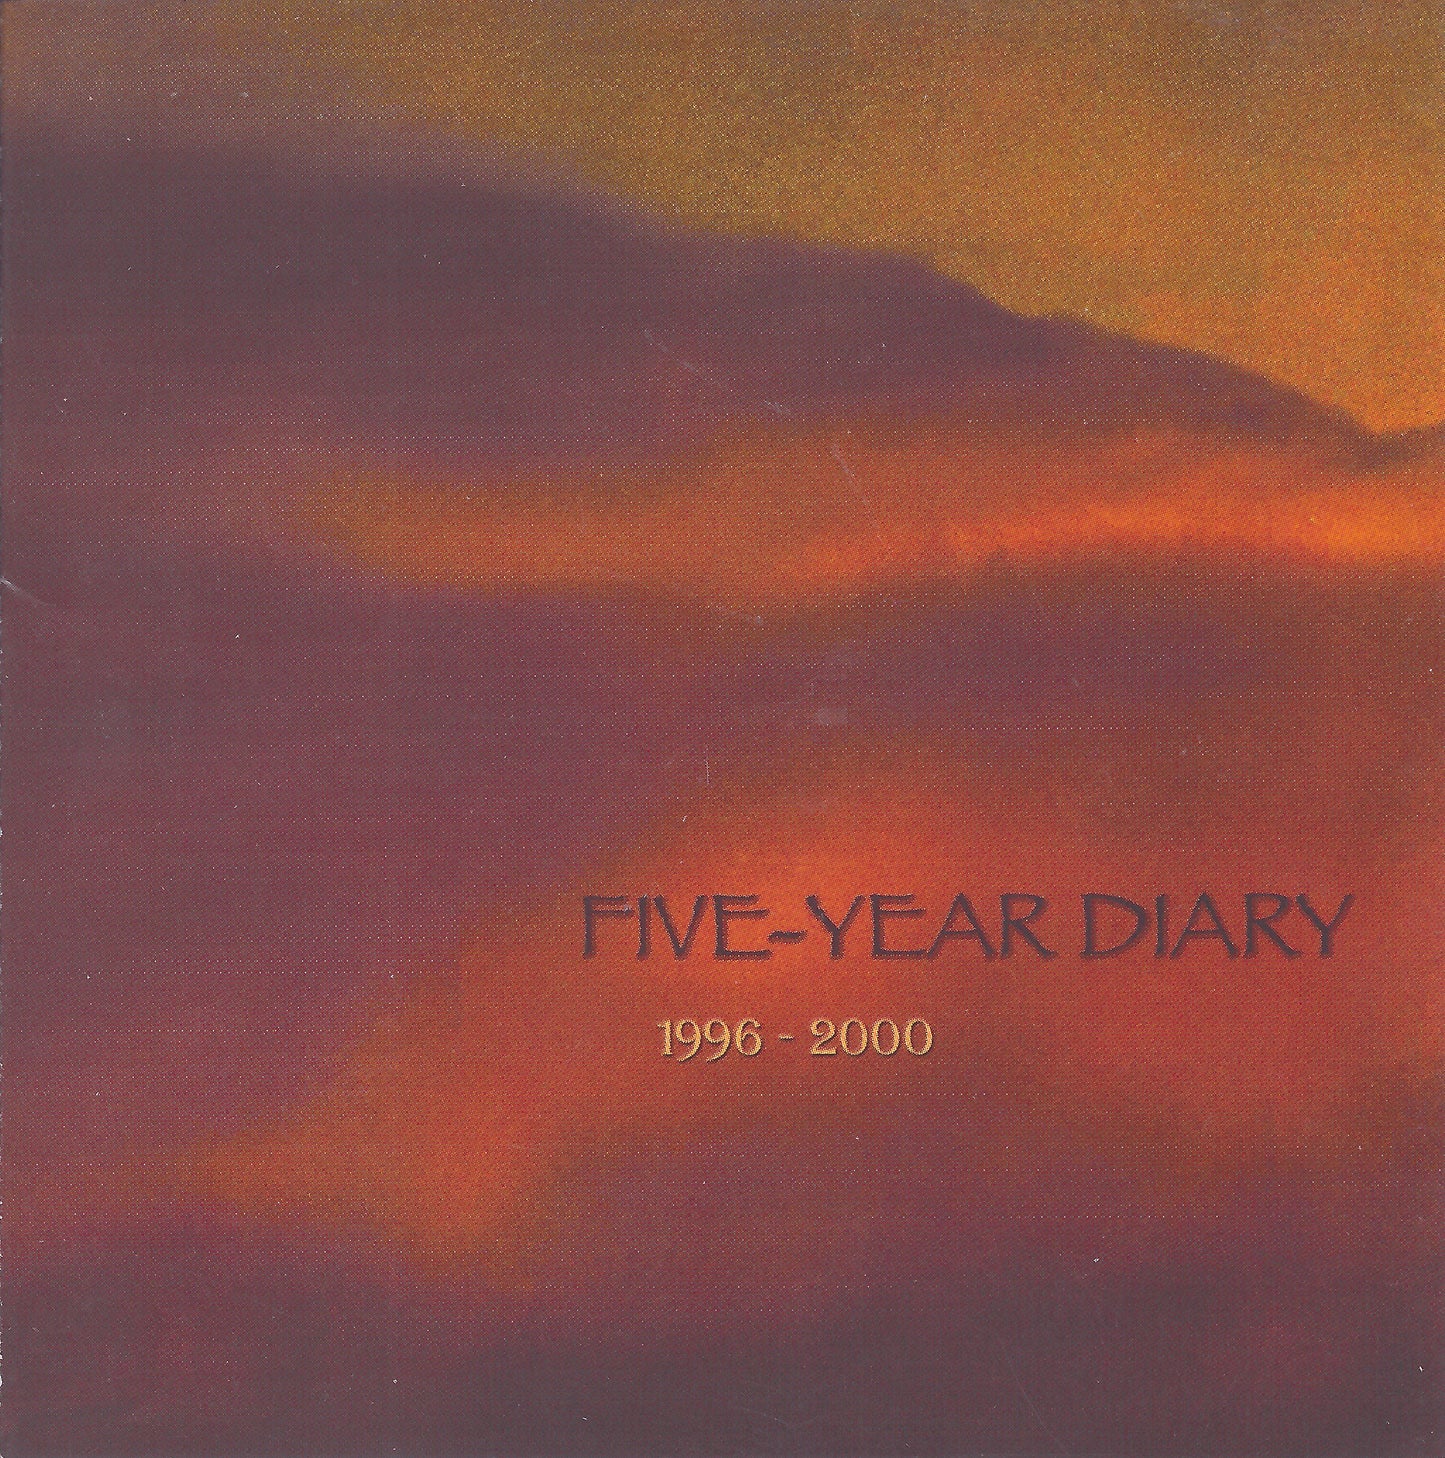 Five Year Diary (Reprise) (Live) - Chamberlain